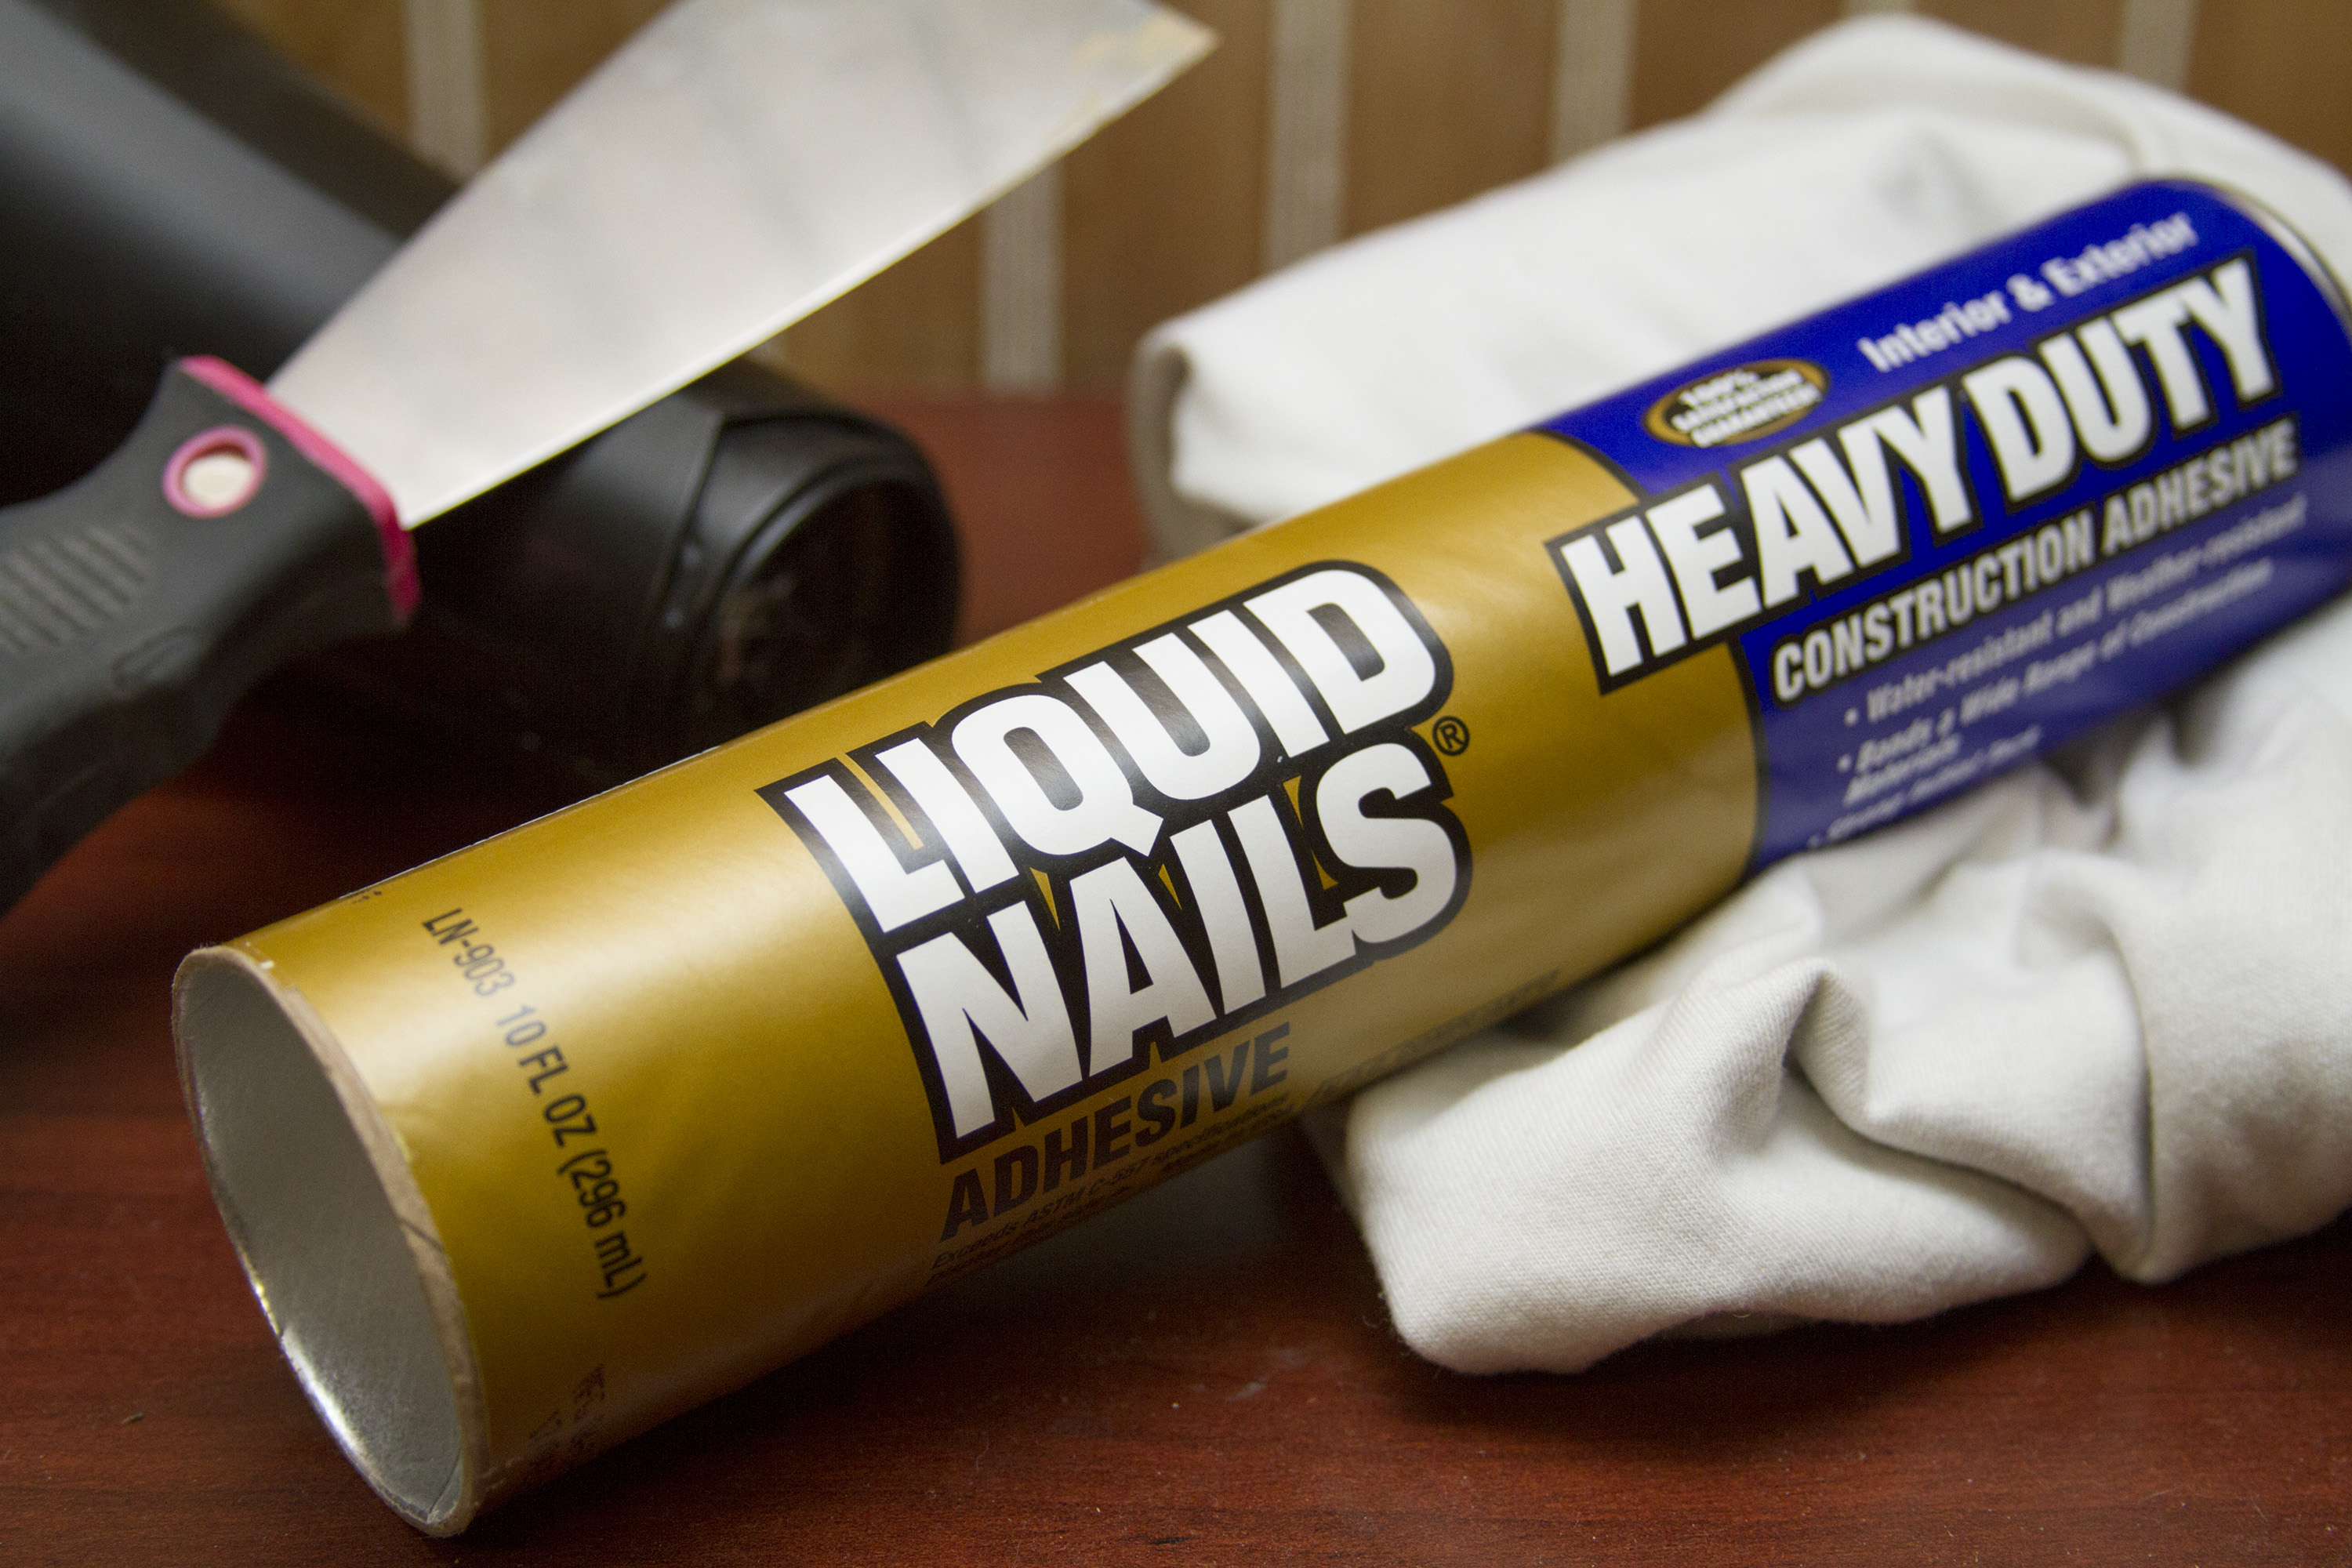 Liquid Nails vs. Wood Glue: The Ultimate Face-off